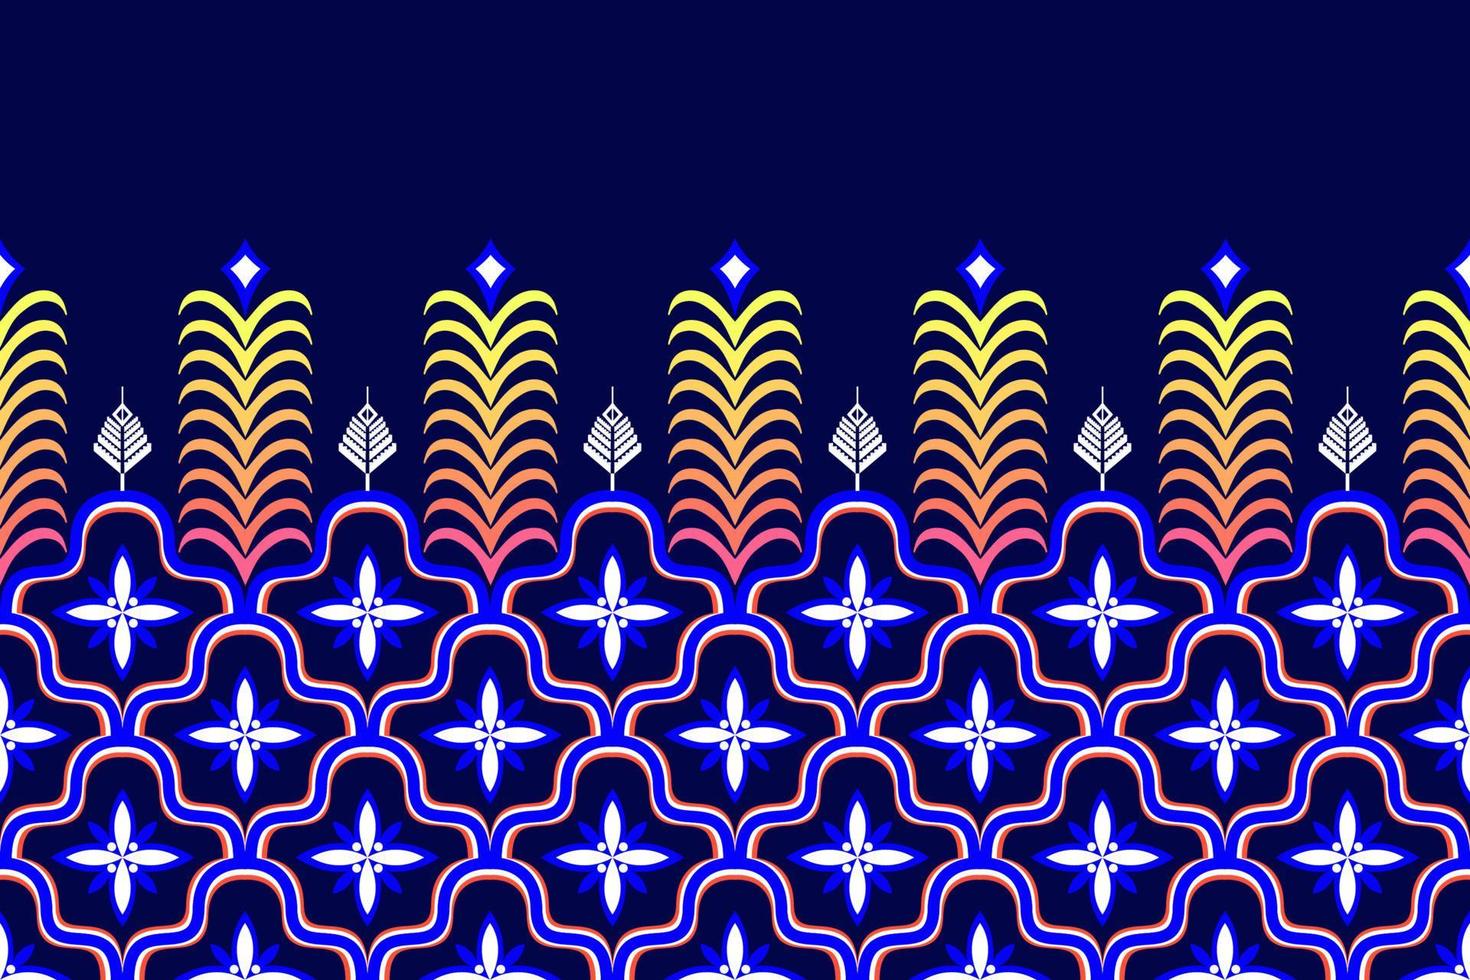 marockansk etnisk mönsterdesign. Aztekisk tyg matta mandala prydnad infödd chevron textil dekoration tapeter. tribal kalkon afrikansk indian traditionell broderi vektor illustrationer bakgrund